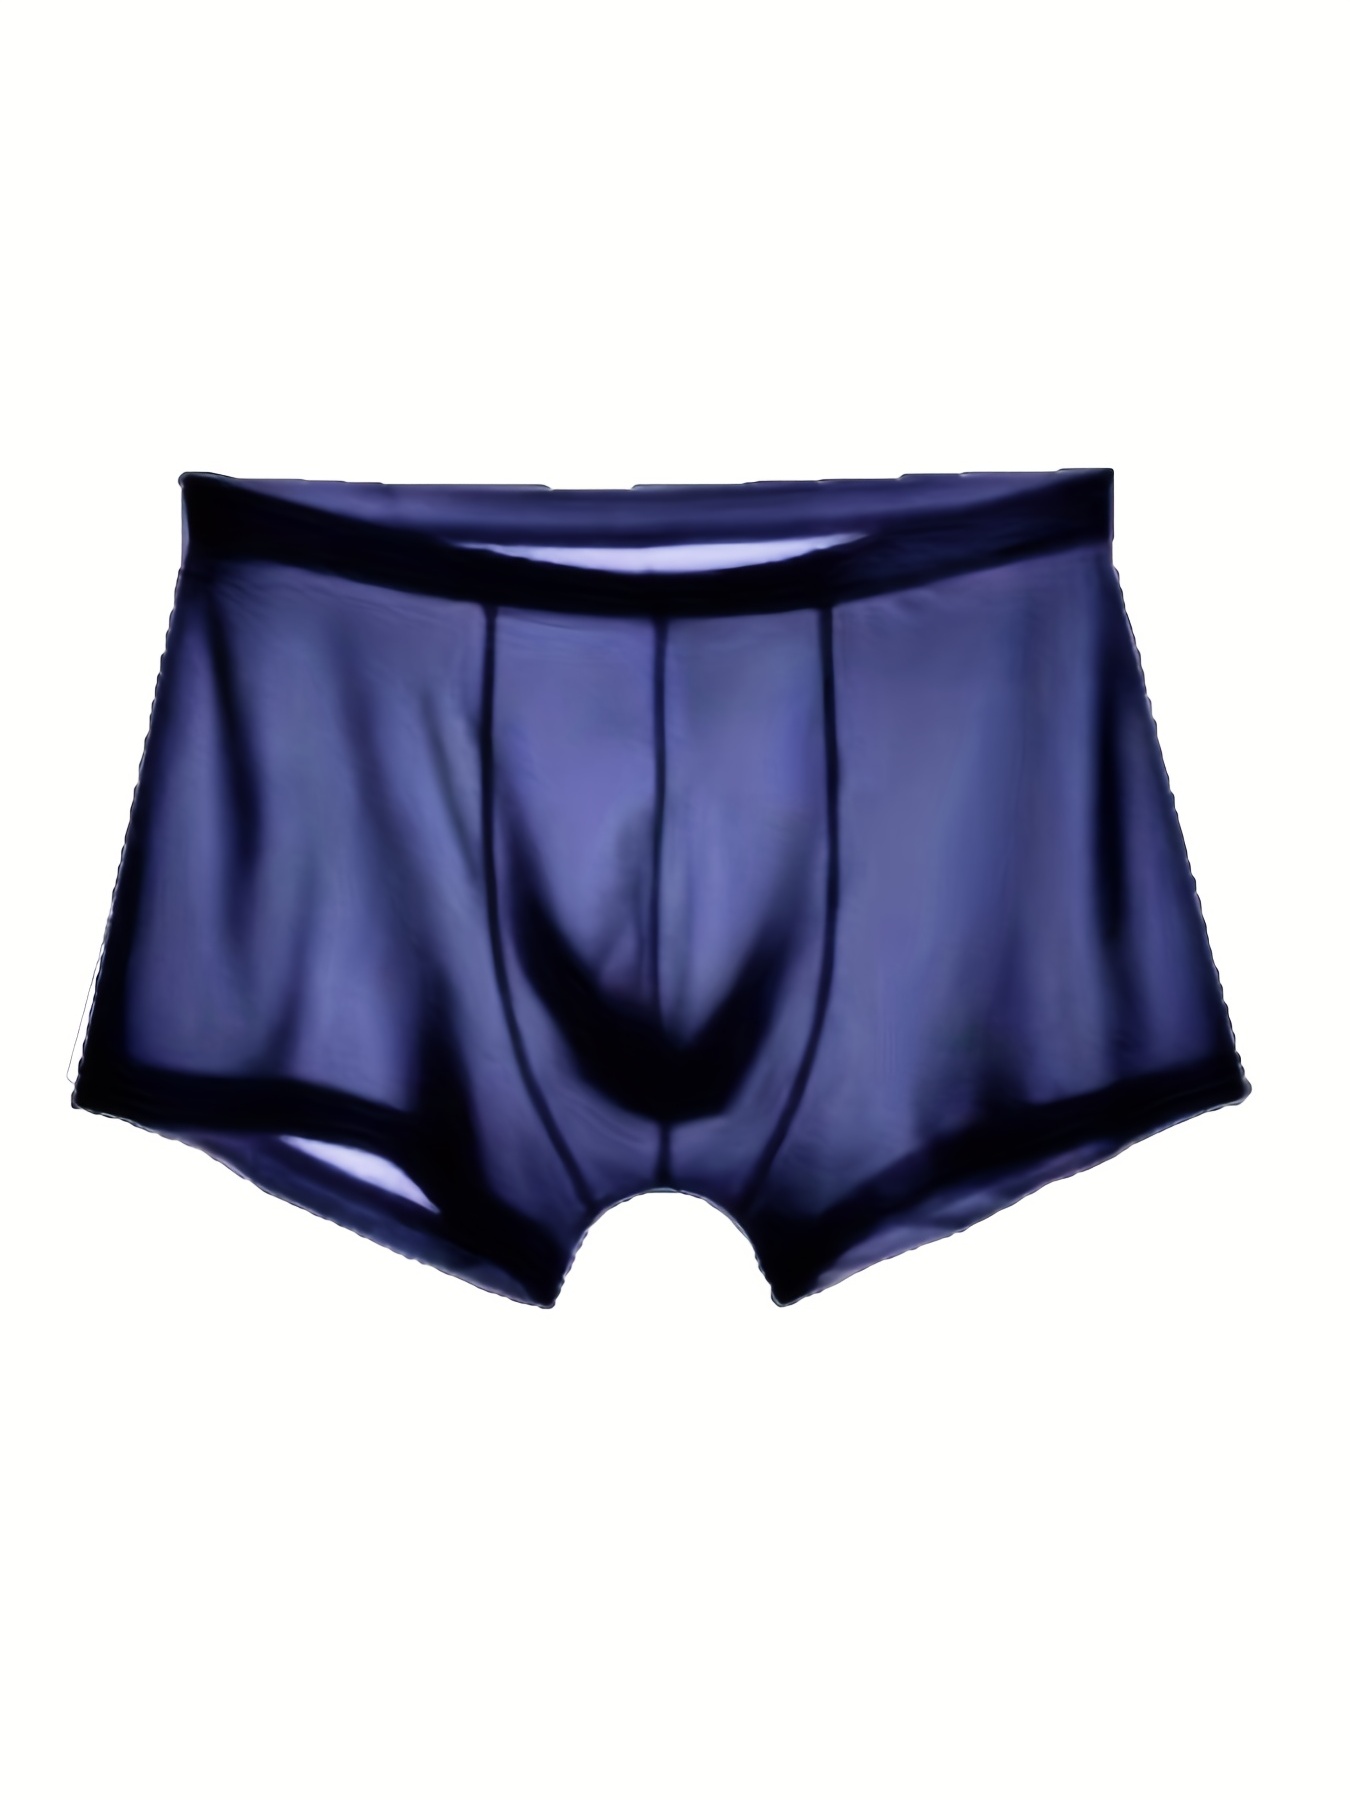 Men's Ice Silk Seamless Boxer Underwear Comfort Breathable Transparent  Panties